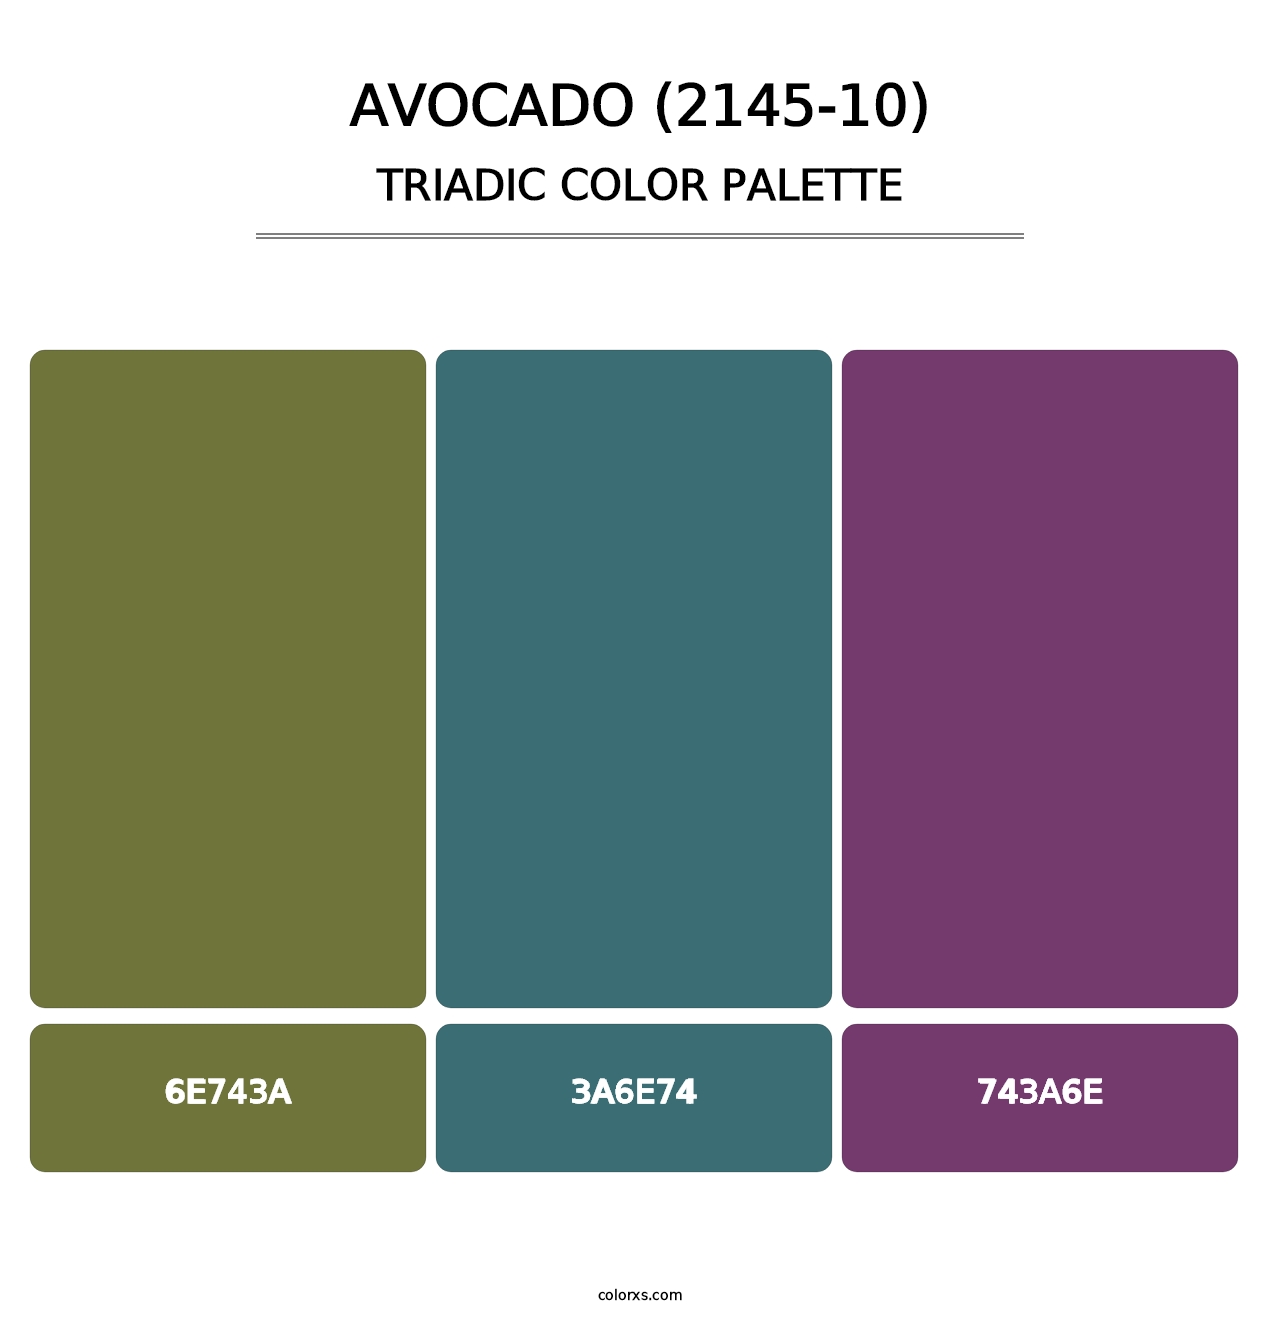 Avocado (2145-10) - Triadic Color Palette